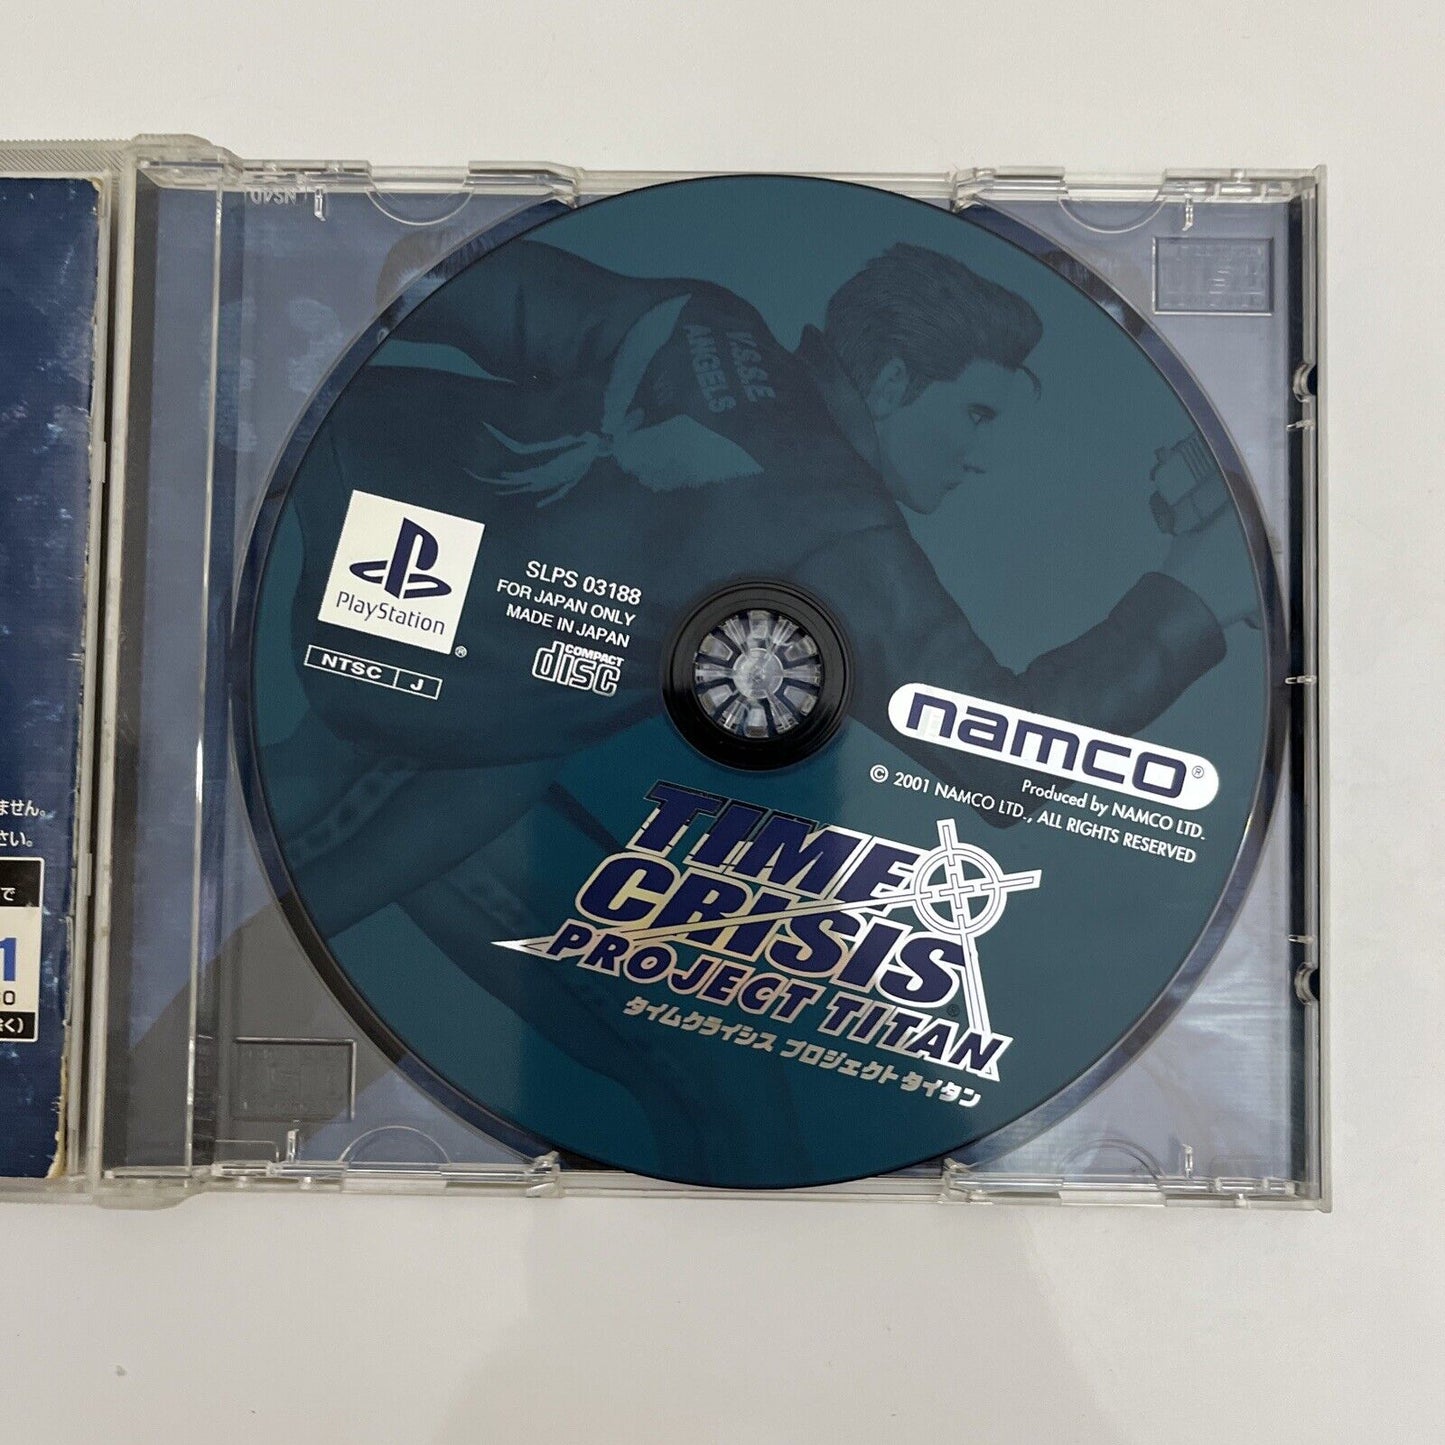 Time Crisis Project Titan - Sony PlayStation PS1 NTSC-J JAPAN Light Gun Game